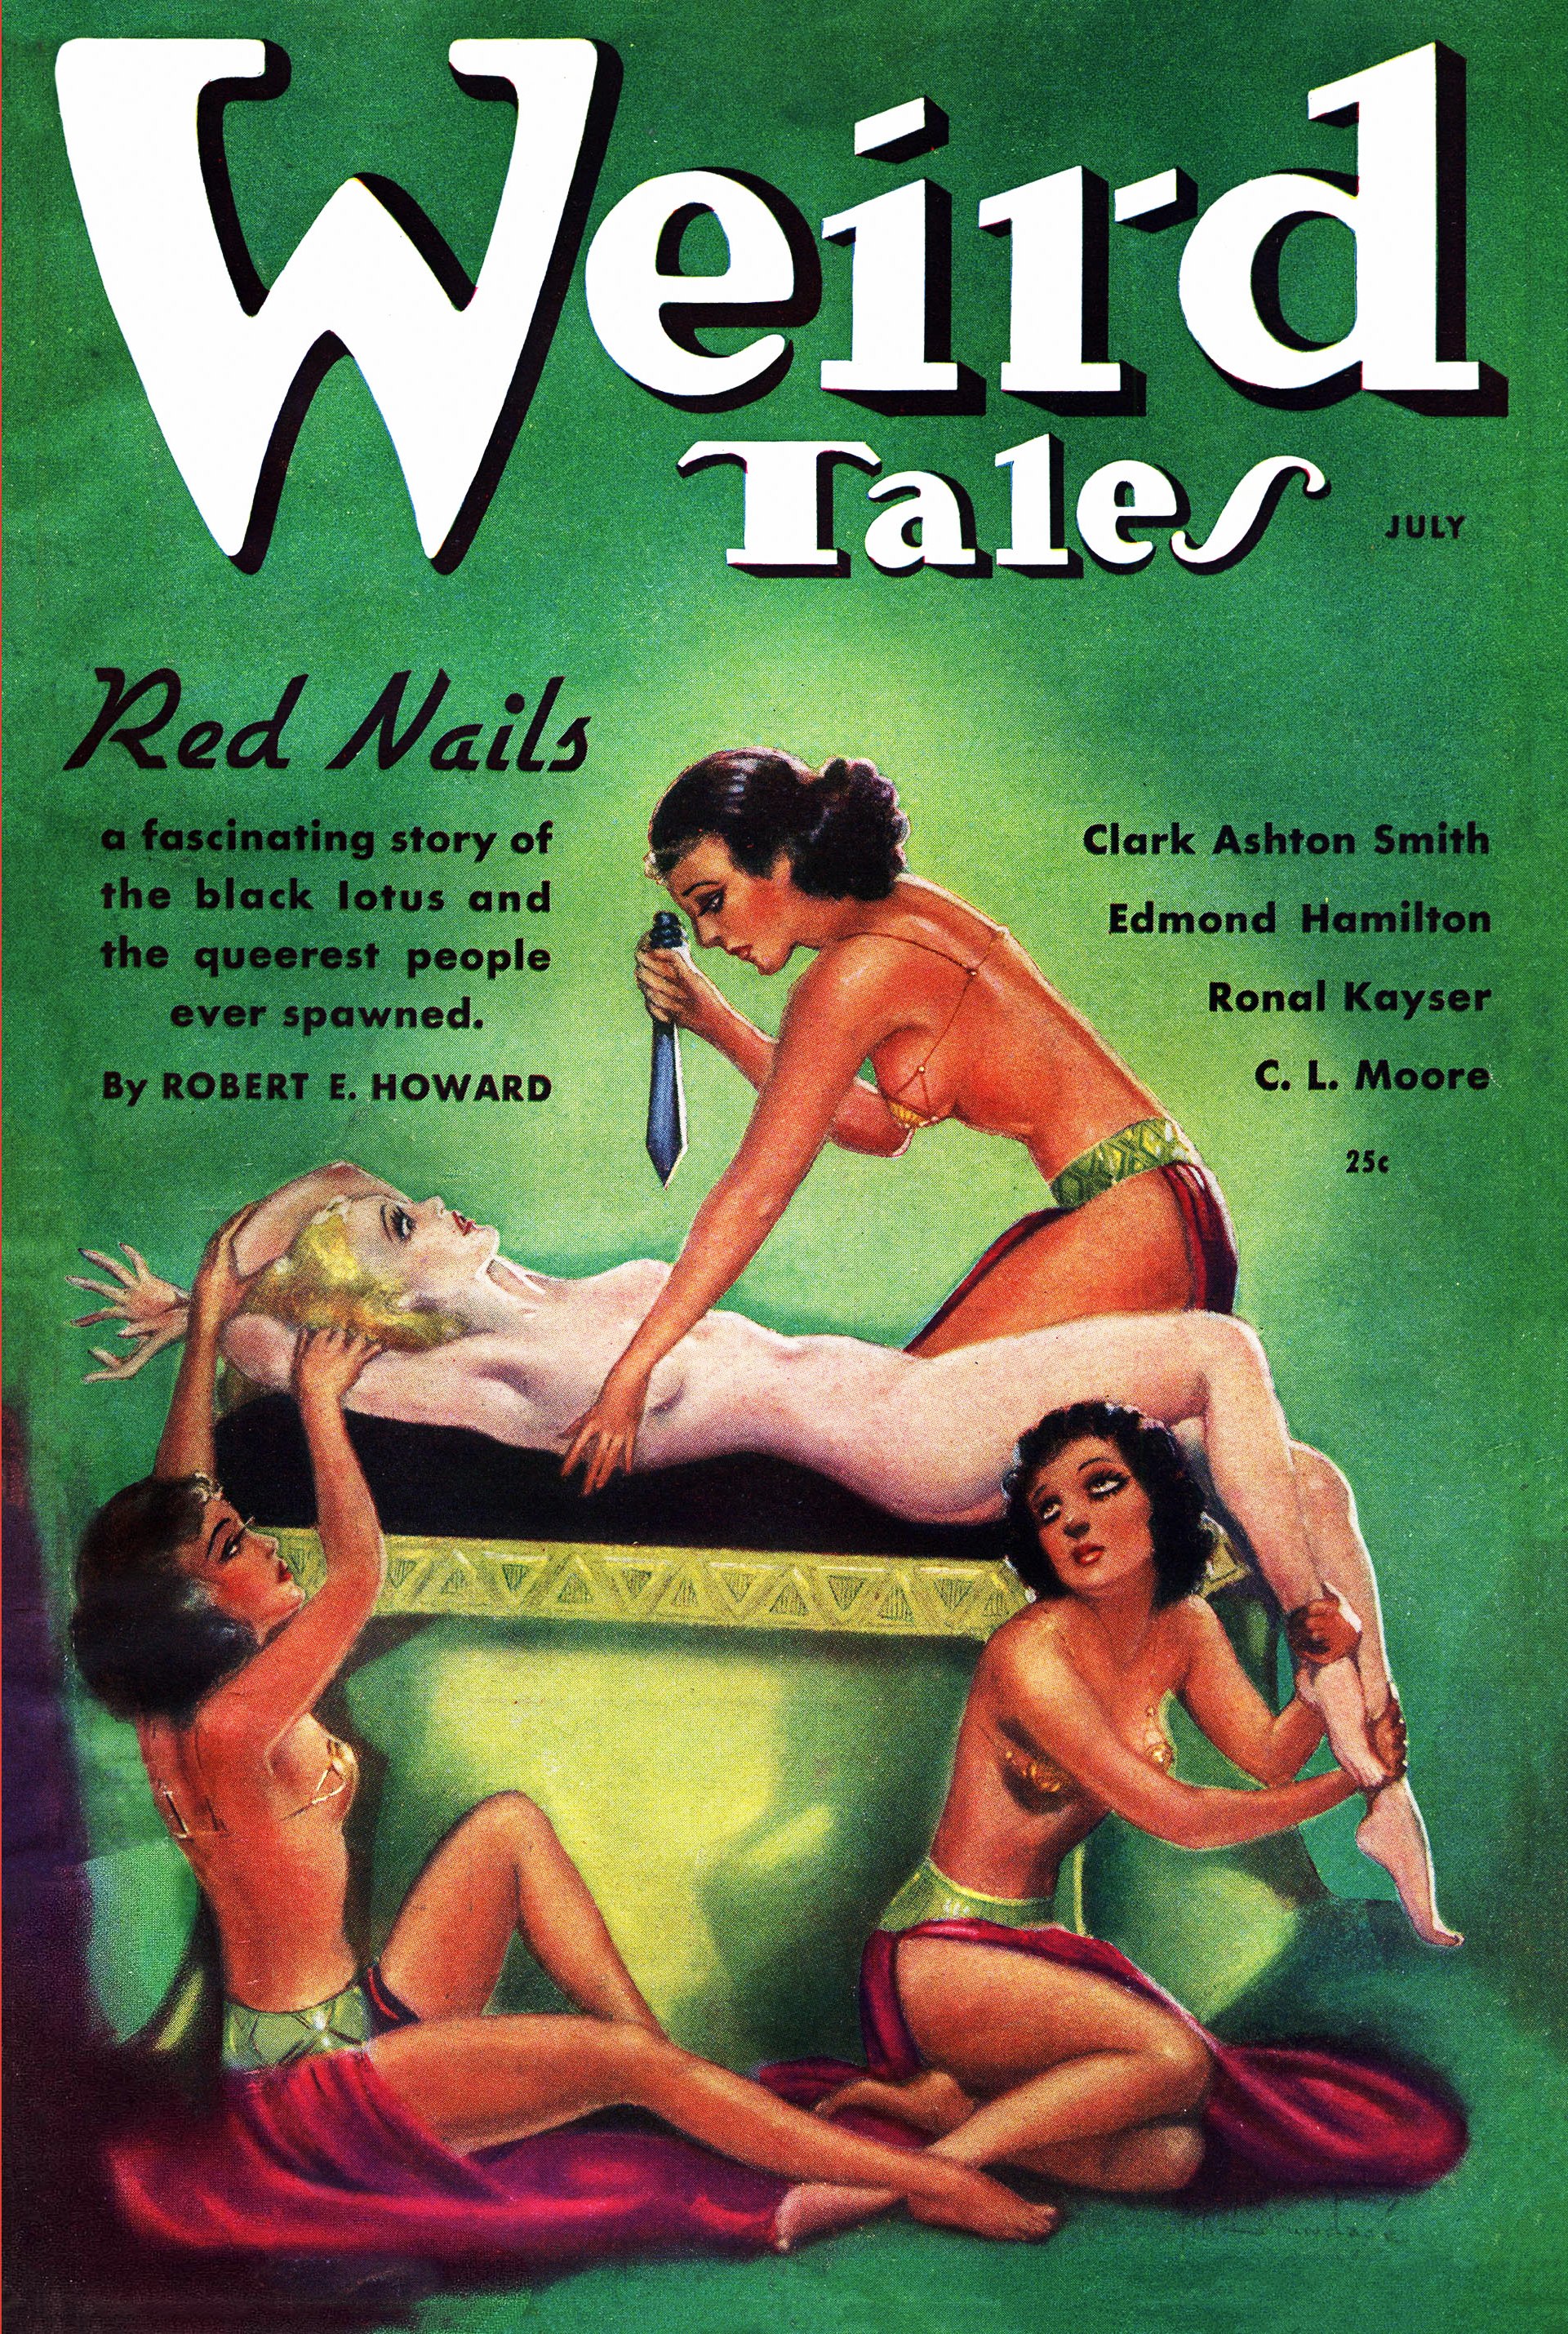 Image - Red Nails by Robert E. Howard